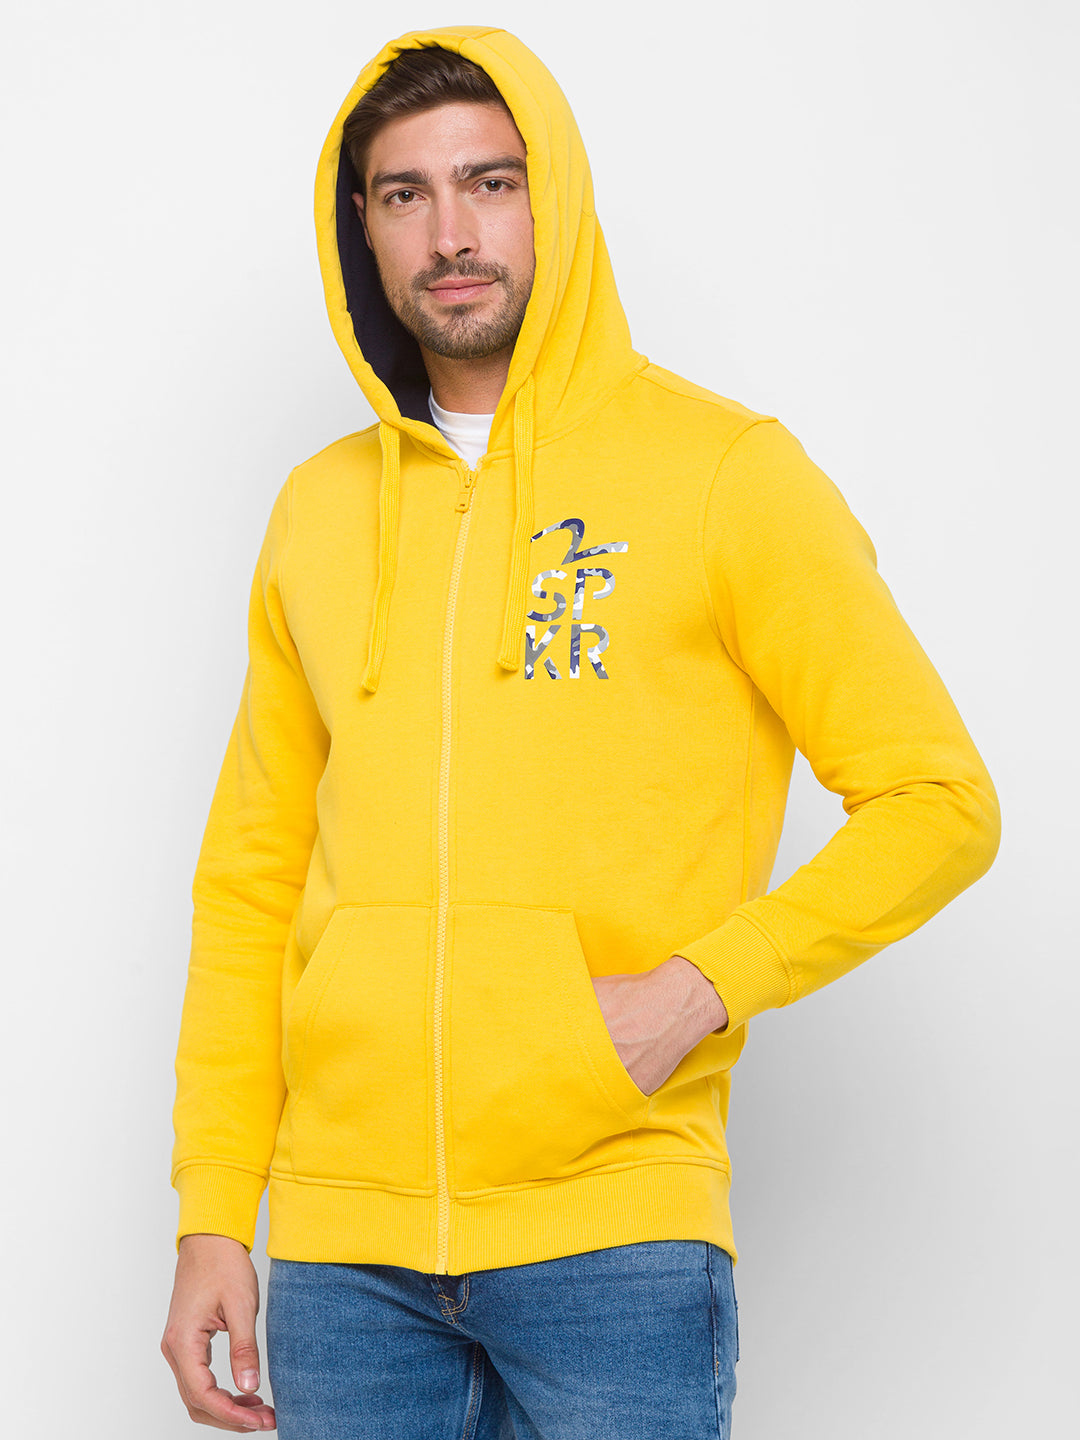 Spykar Yellow Cotton Regular Fit Sweatshirt For Men